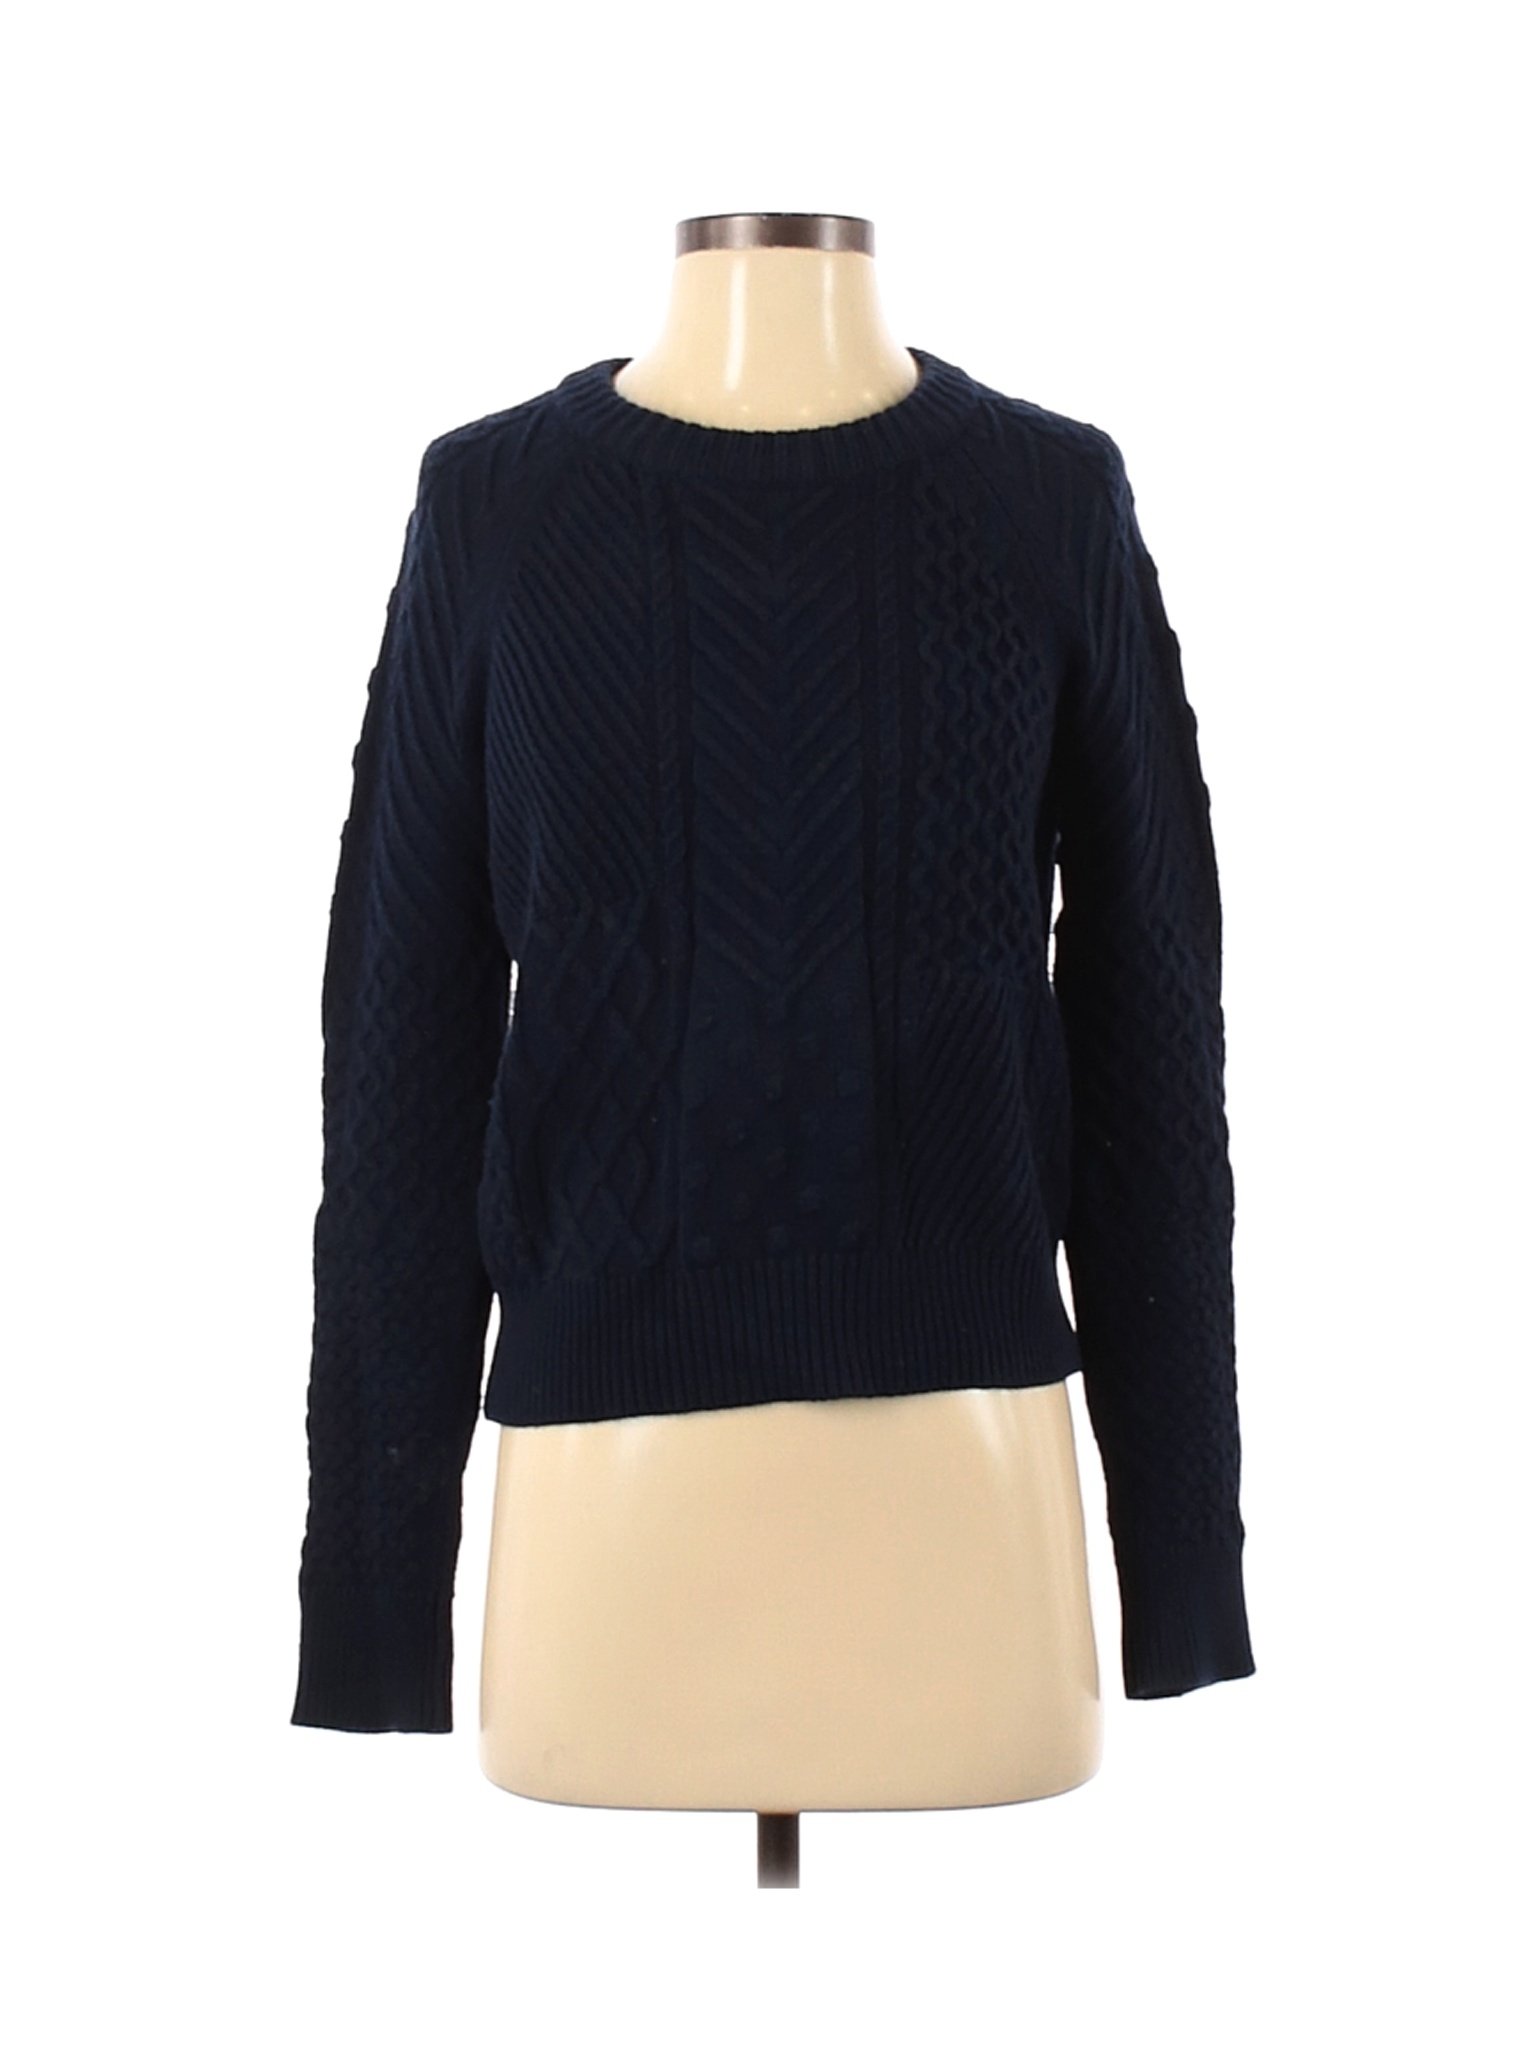 1.State Women Black Pullover Sweater S | eBay